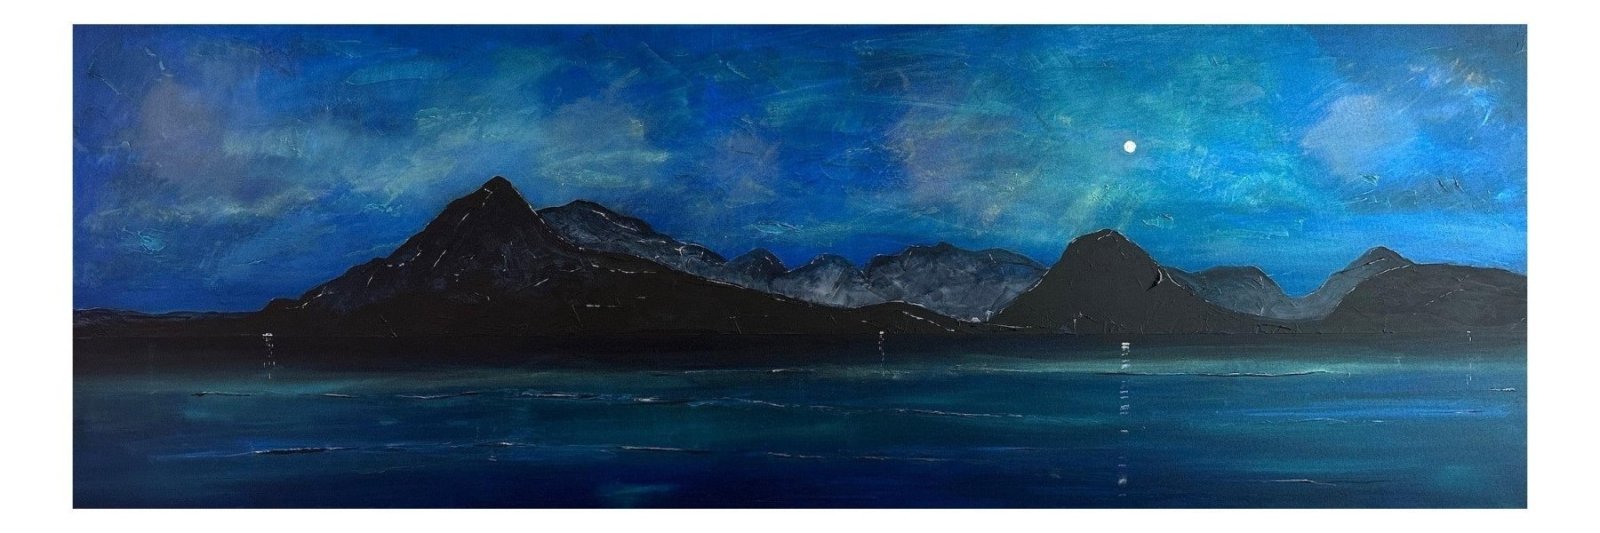 Skye Prussian Twilight-Panoramic Prints-Skye Art Gallery-Paintings, Prints, Homeware, Art Gifts From Scotland By Scottish Artist Kevin Hunter